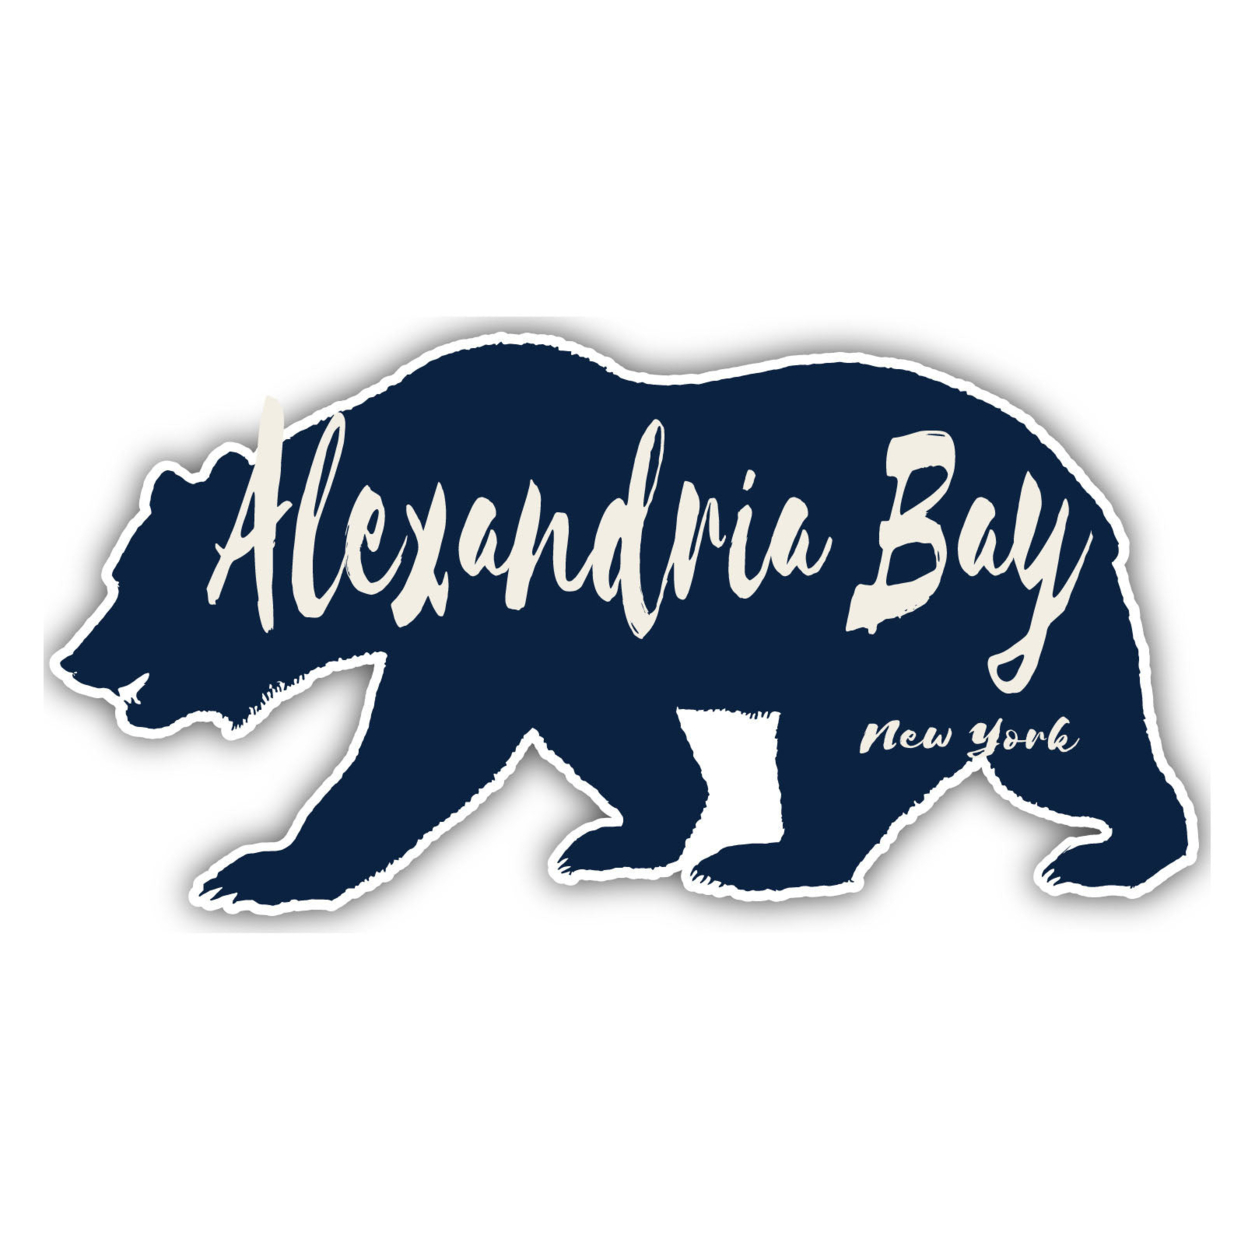 Alexandria Bay New York Souvenir Decorative Stickers (Choose Theme And Size) - Single Unit, 8-Inch, Bear